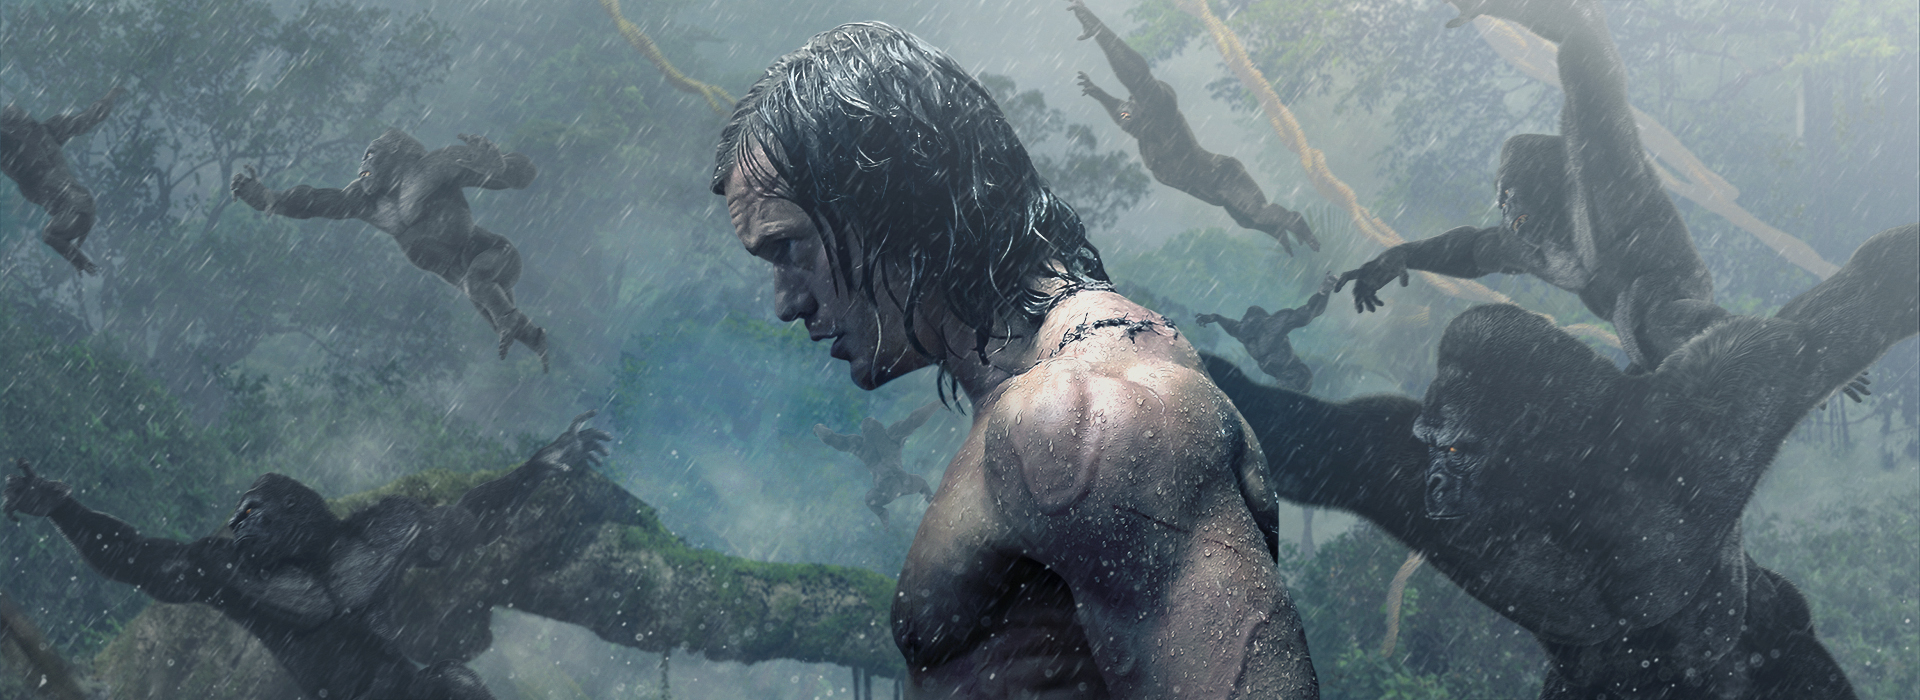 Movie poster The Legend of Tarzan